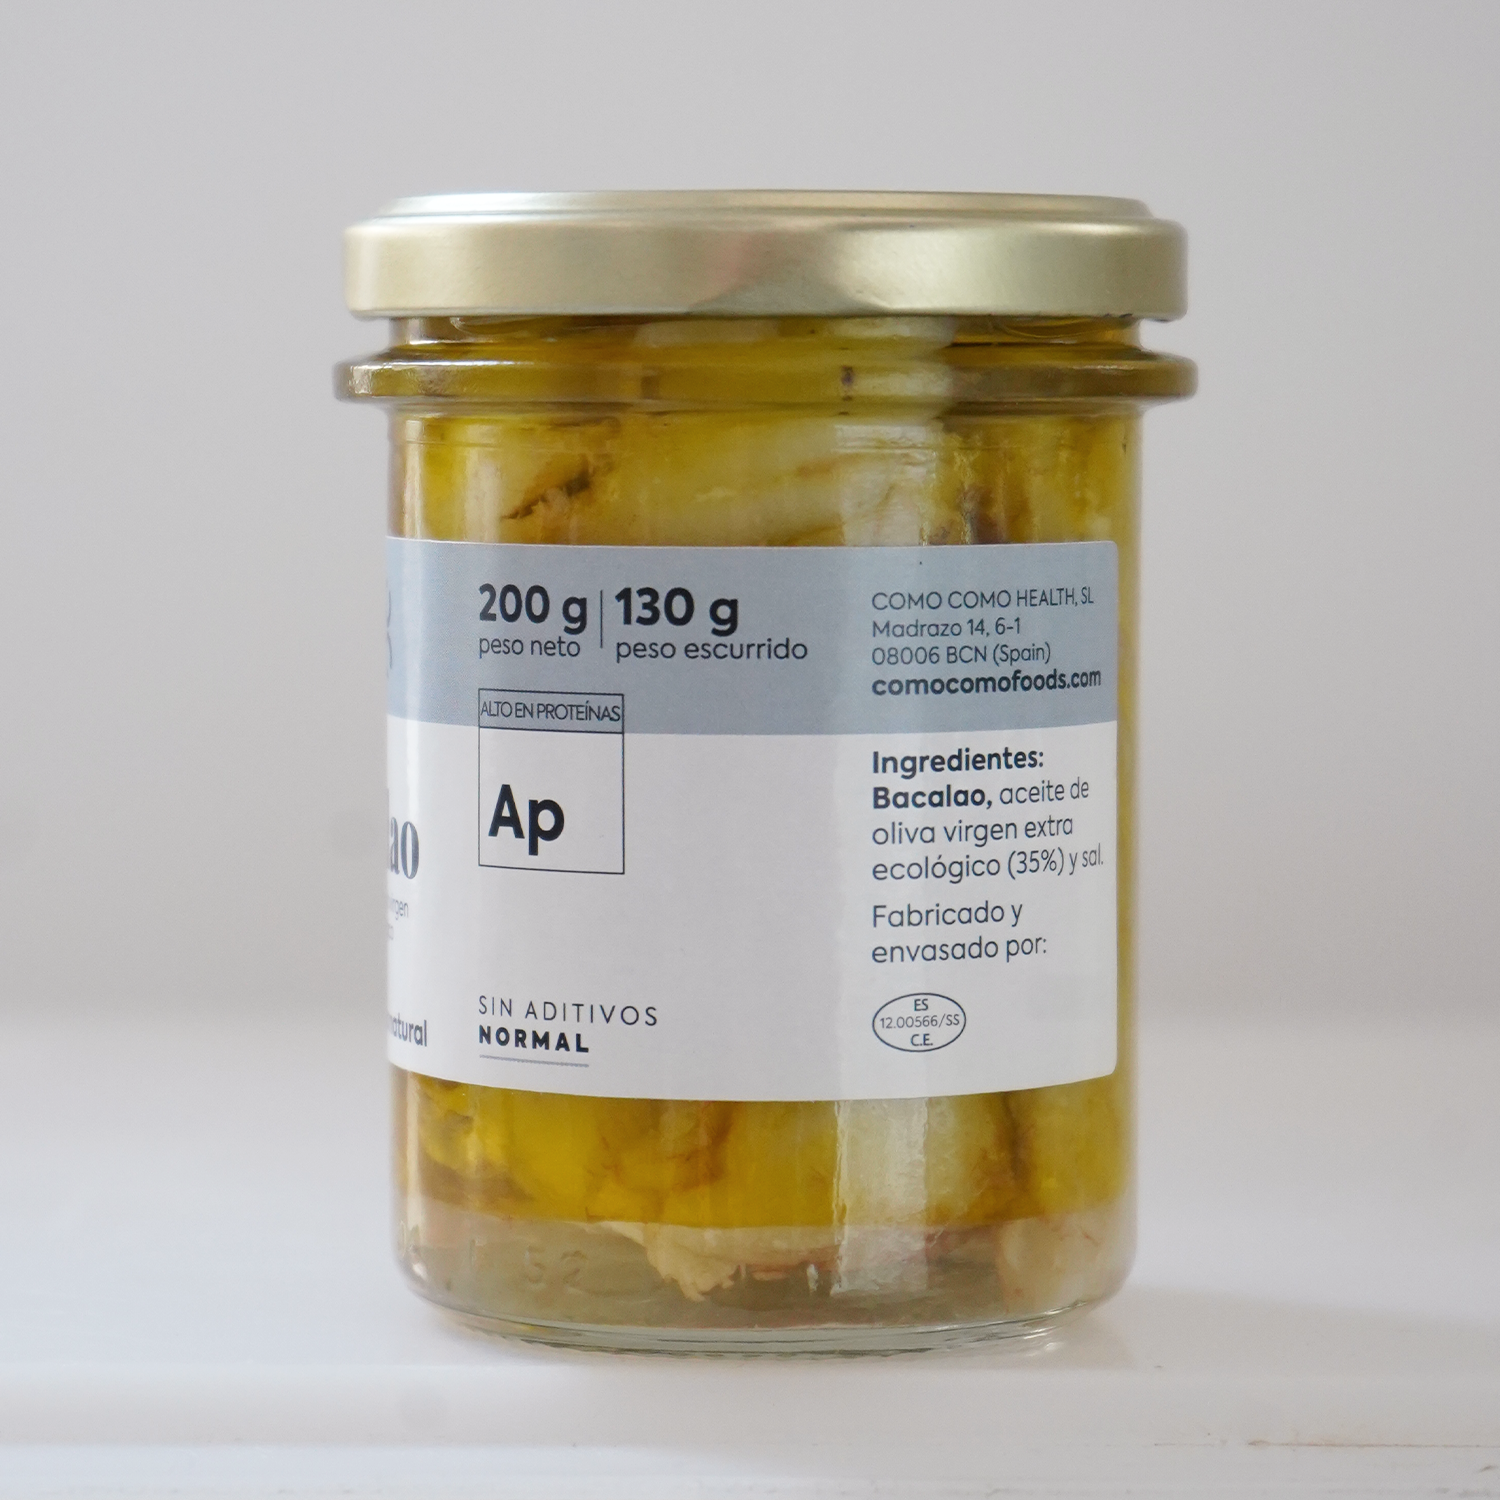 Reverso tarro de cristal con bacalao en aceite de oliva virgen extra ecológico